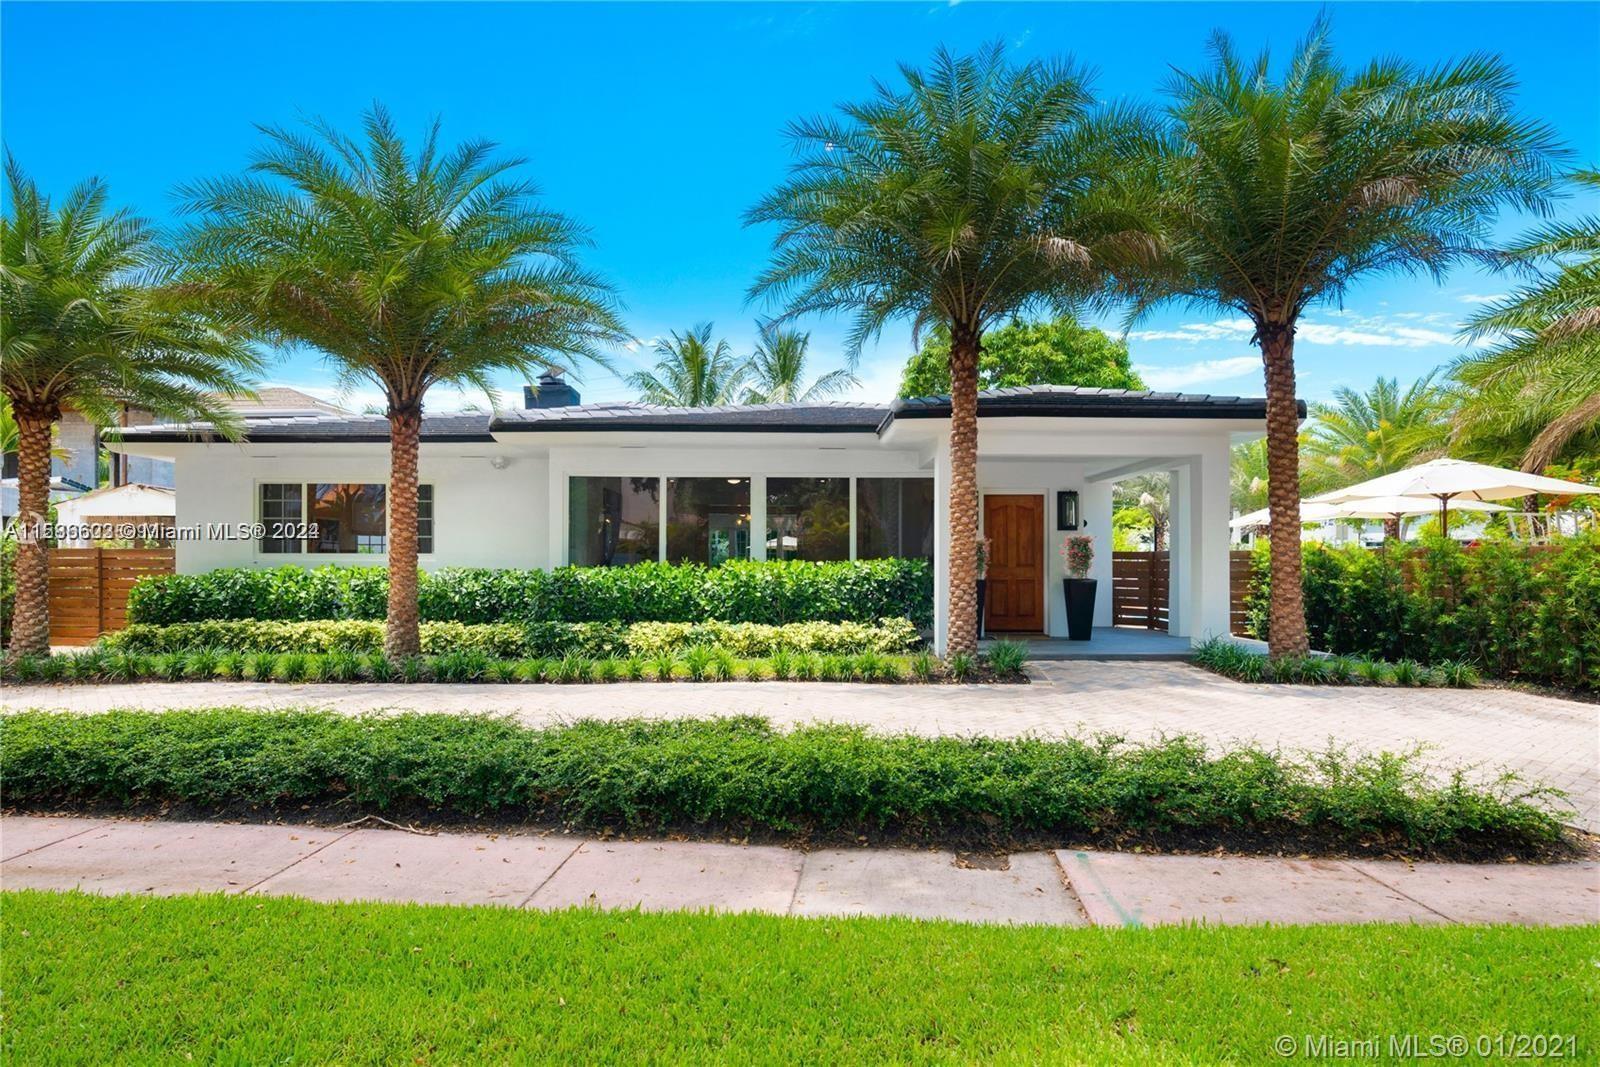 Rental Property at 2575 Pine Tree Dr, Miami Beach, Miami-Dade County, Florida - Bedrooms: 3 
Bathrooms: 3  - $30,000 MO.